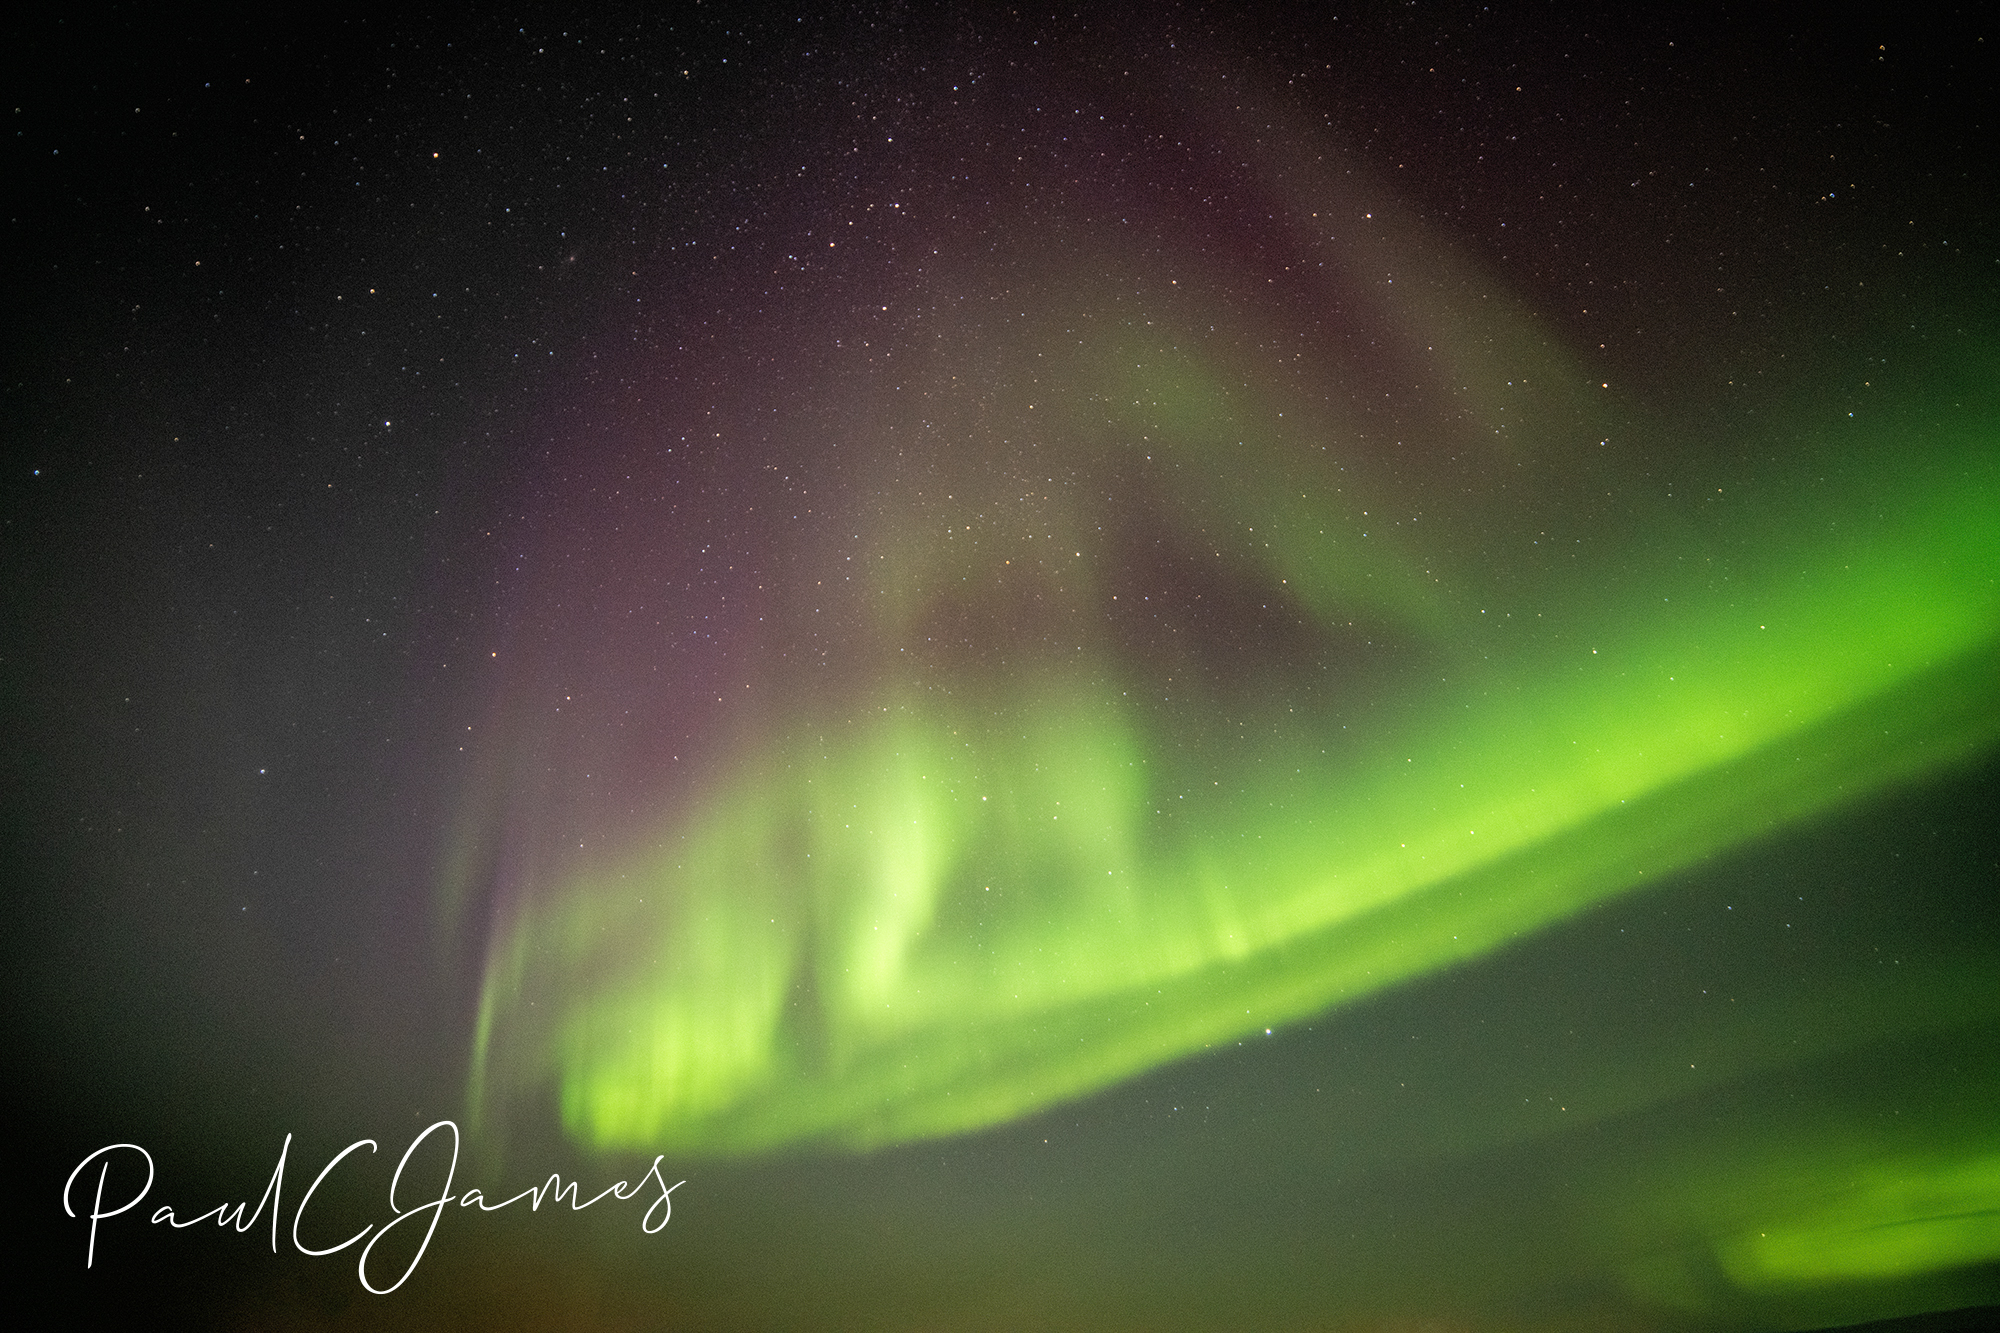 Iceland #1 Northern Lights Photographic field workshop